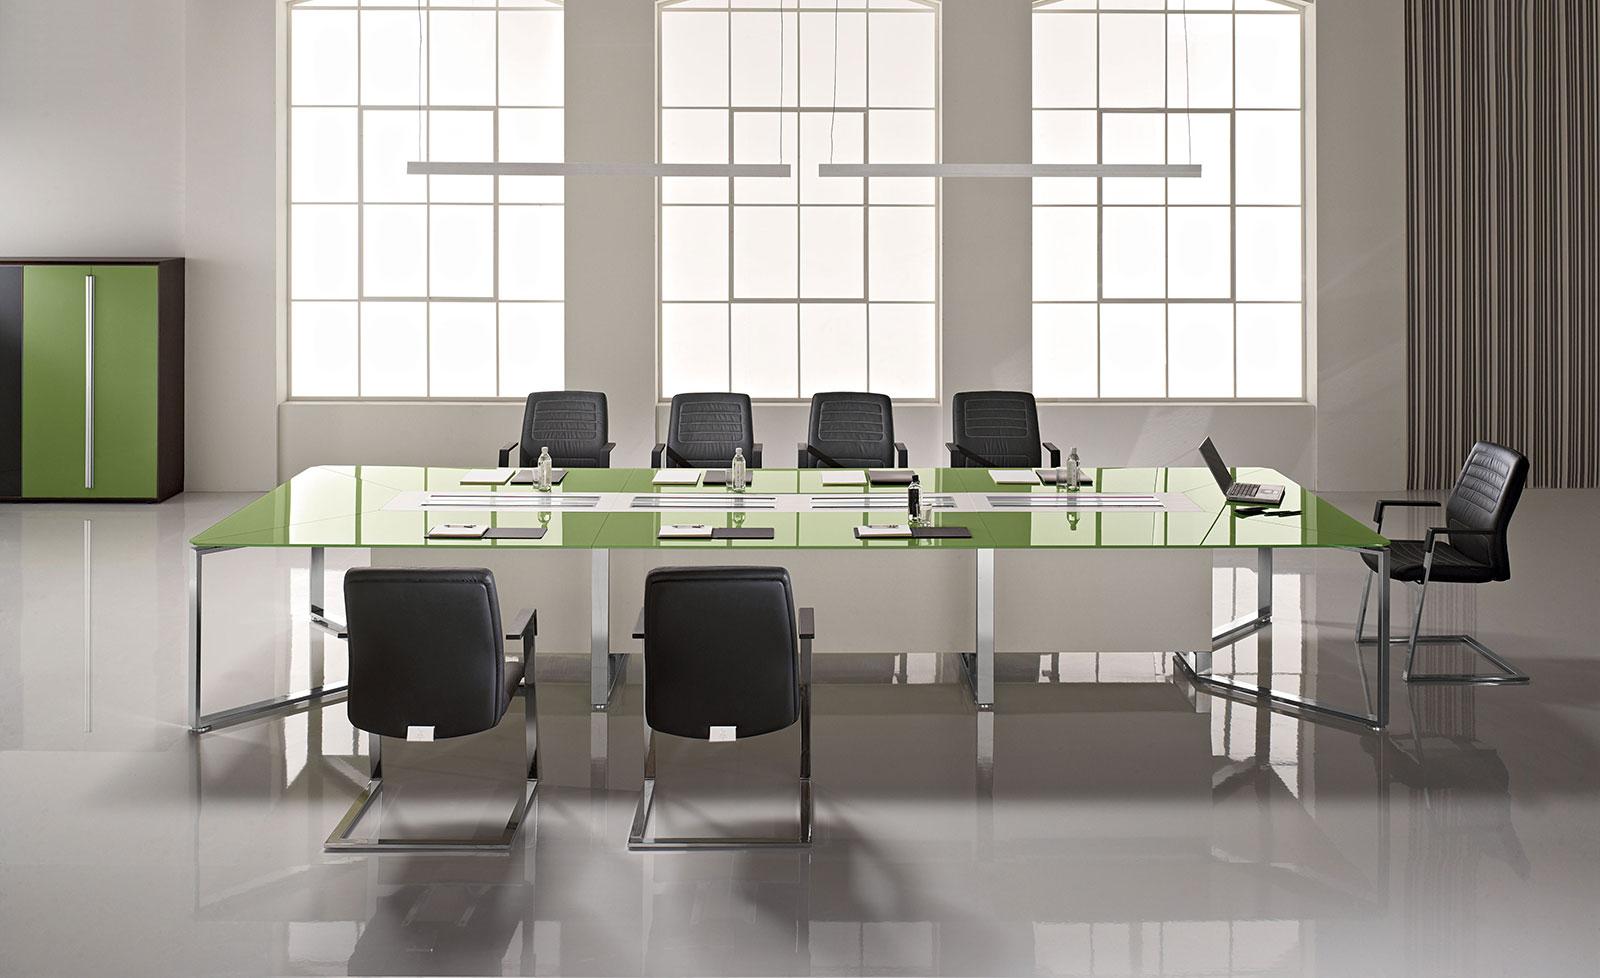 table de réunion meeting bureau direction online made in italy luxe verre bois grande table rectangulaire